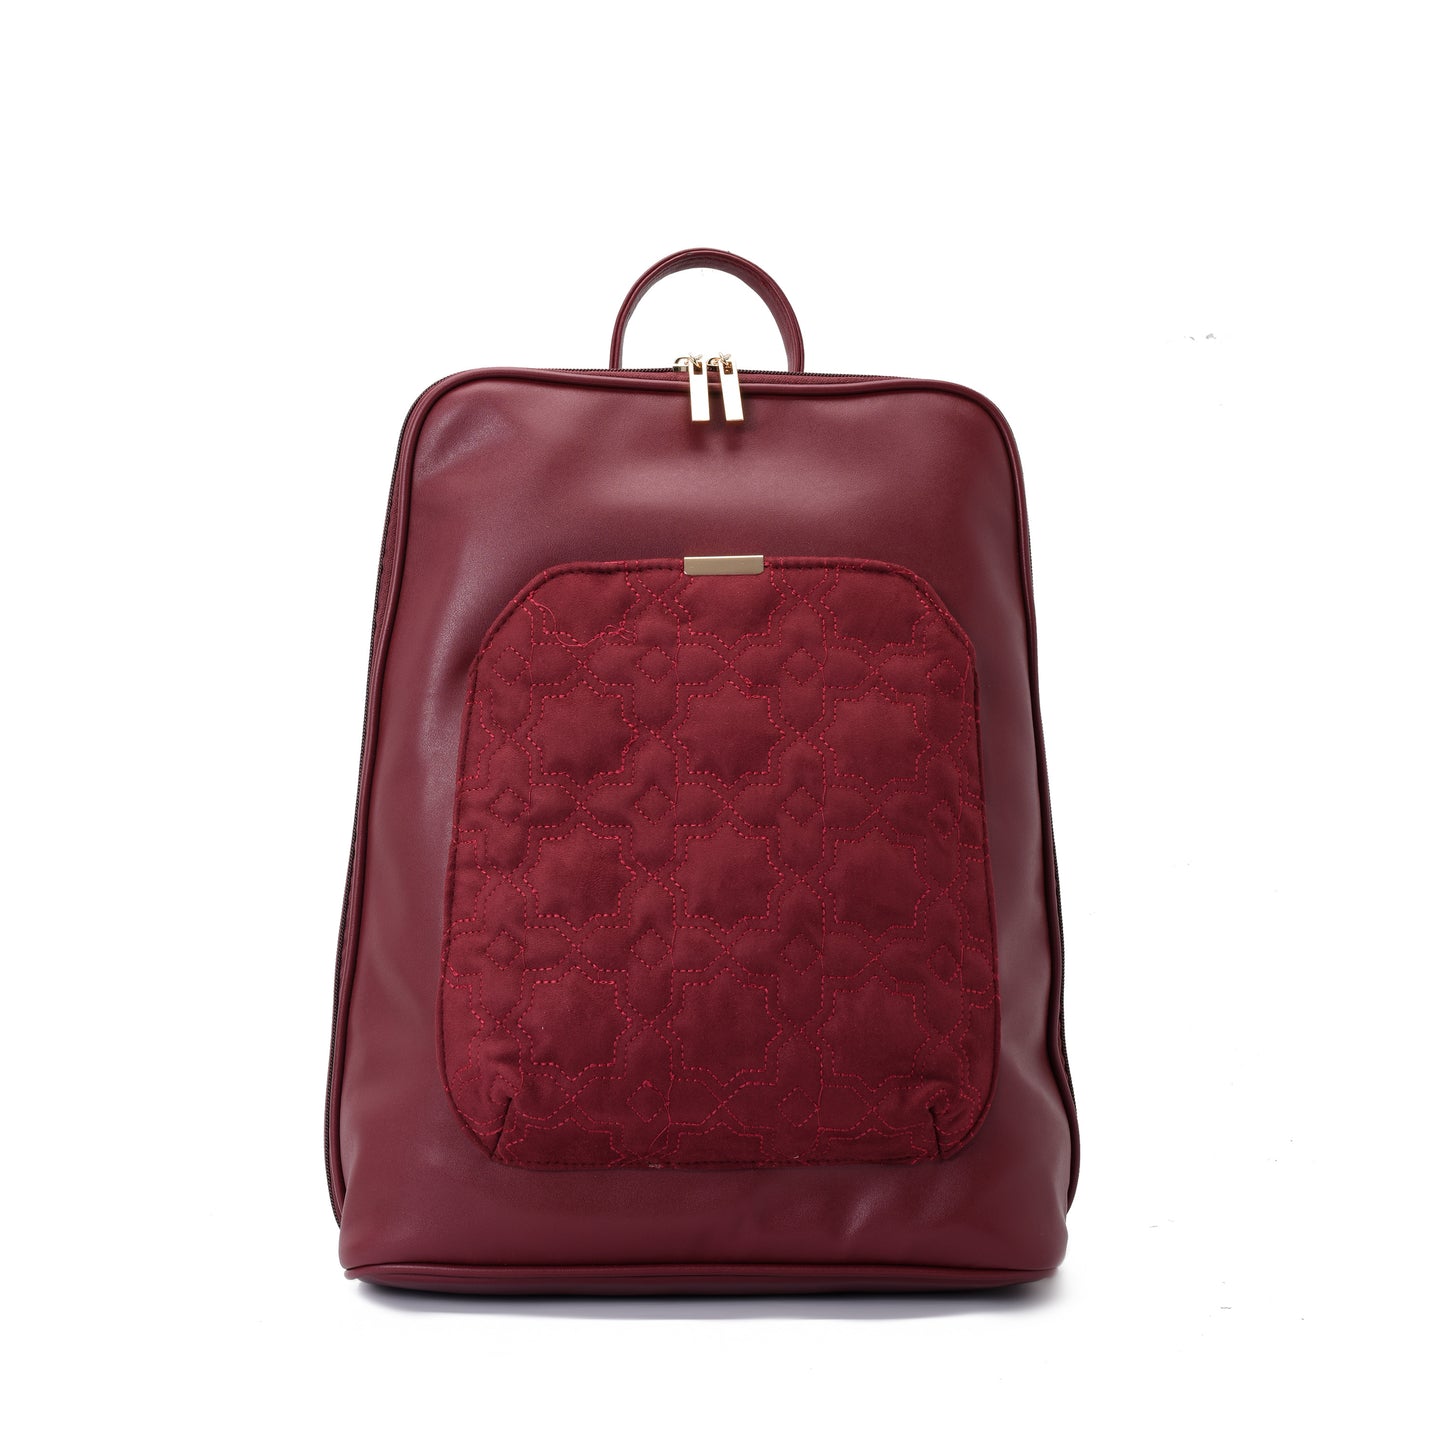 Laptop Burgundy with Burgundy suede Backpack/Cross - Code 2005